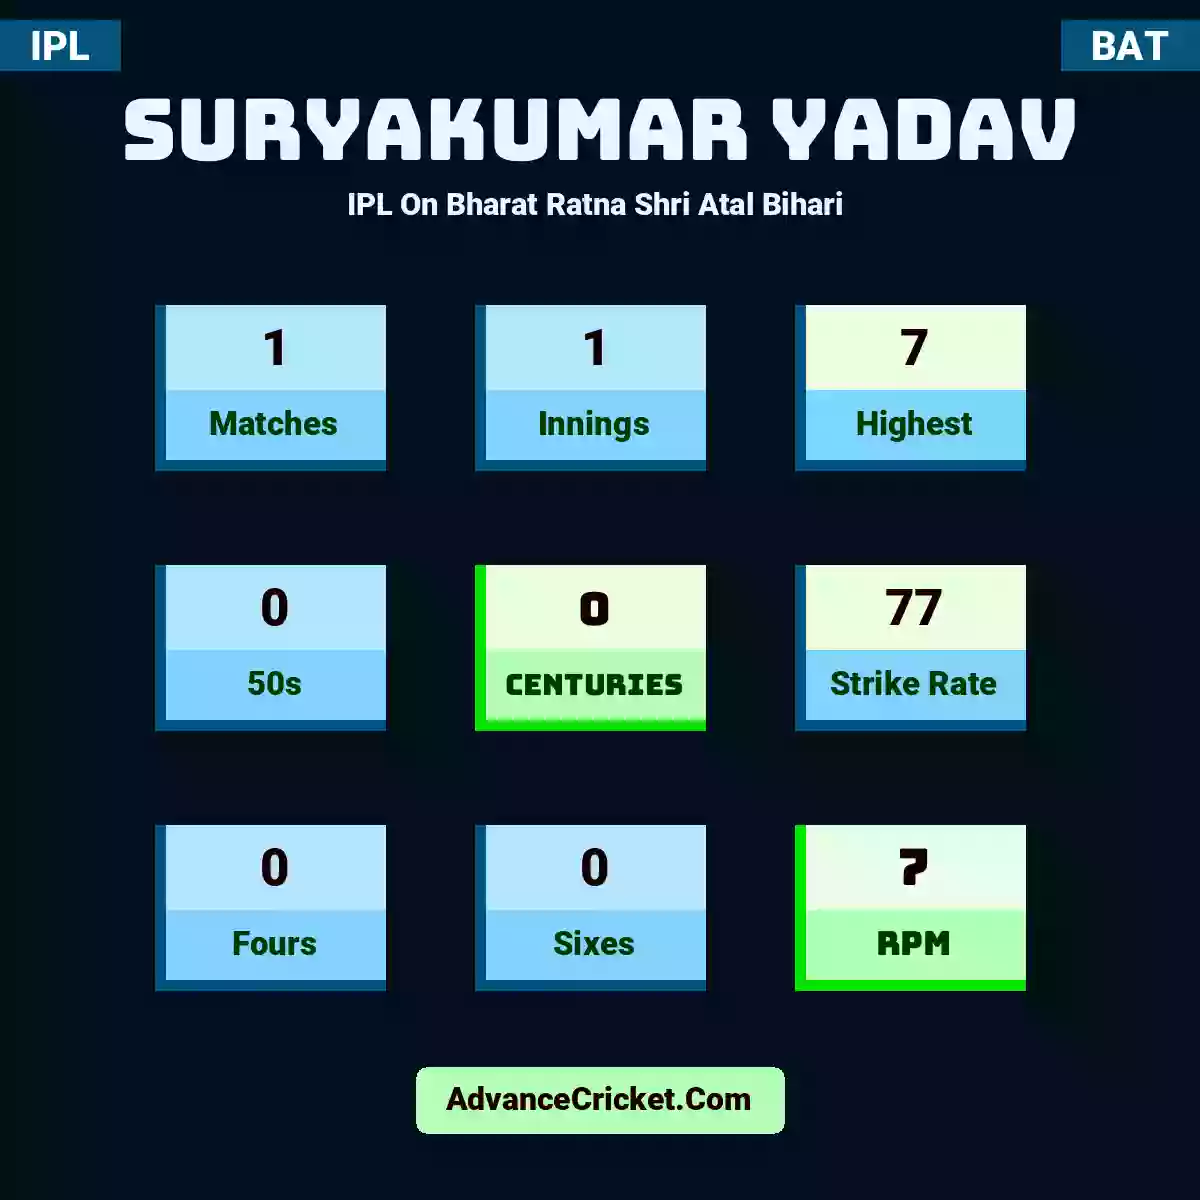 Suryakumar Yadav IPL  On Bharat Ratna Shri Atal Bihari , Suryakumar Yadav played 1 matches, scored 7 runs as highest, 0 half-centuries, and 0 centuries, with a strike rate of 77. S.Yadav hit 0 fours and 0 sixes, with an RPM of 7.